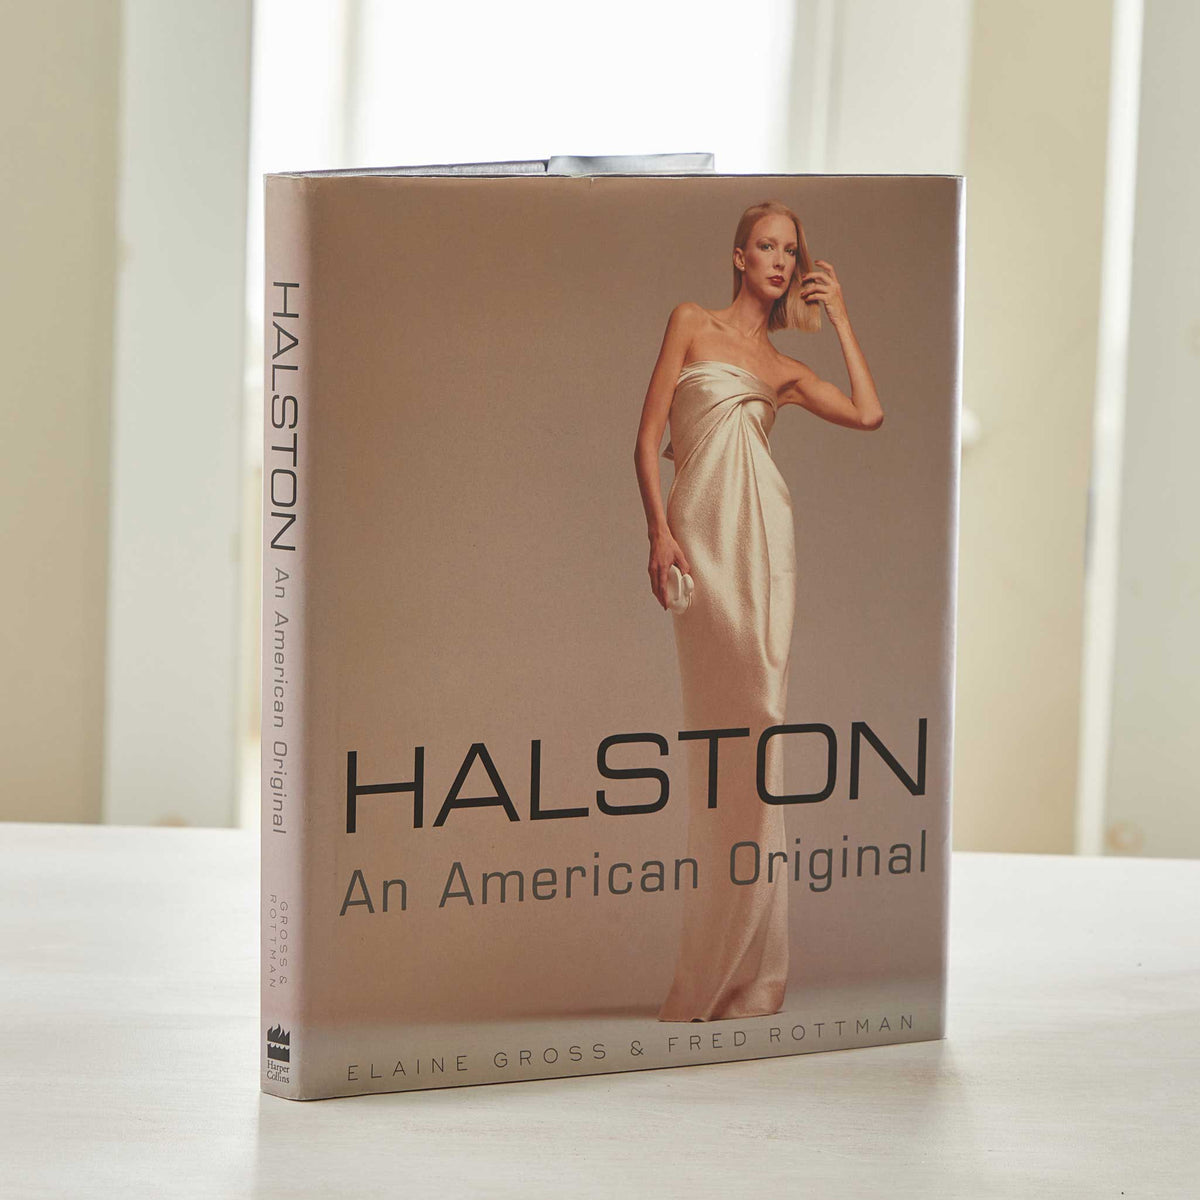 HALSTON, AN AMERICAN ORIGINAL